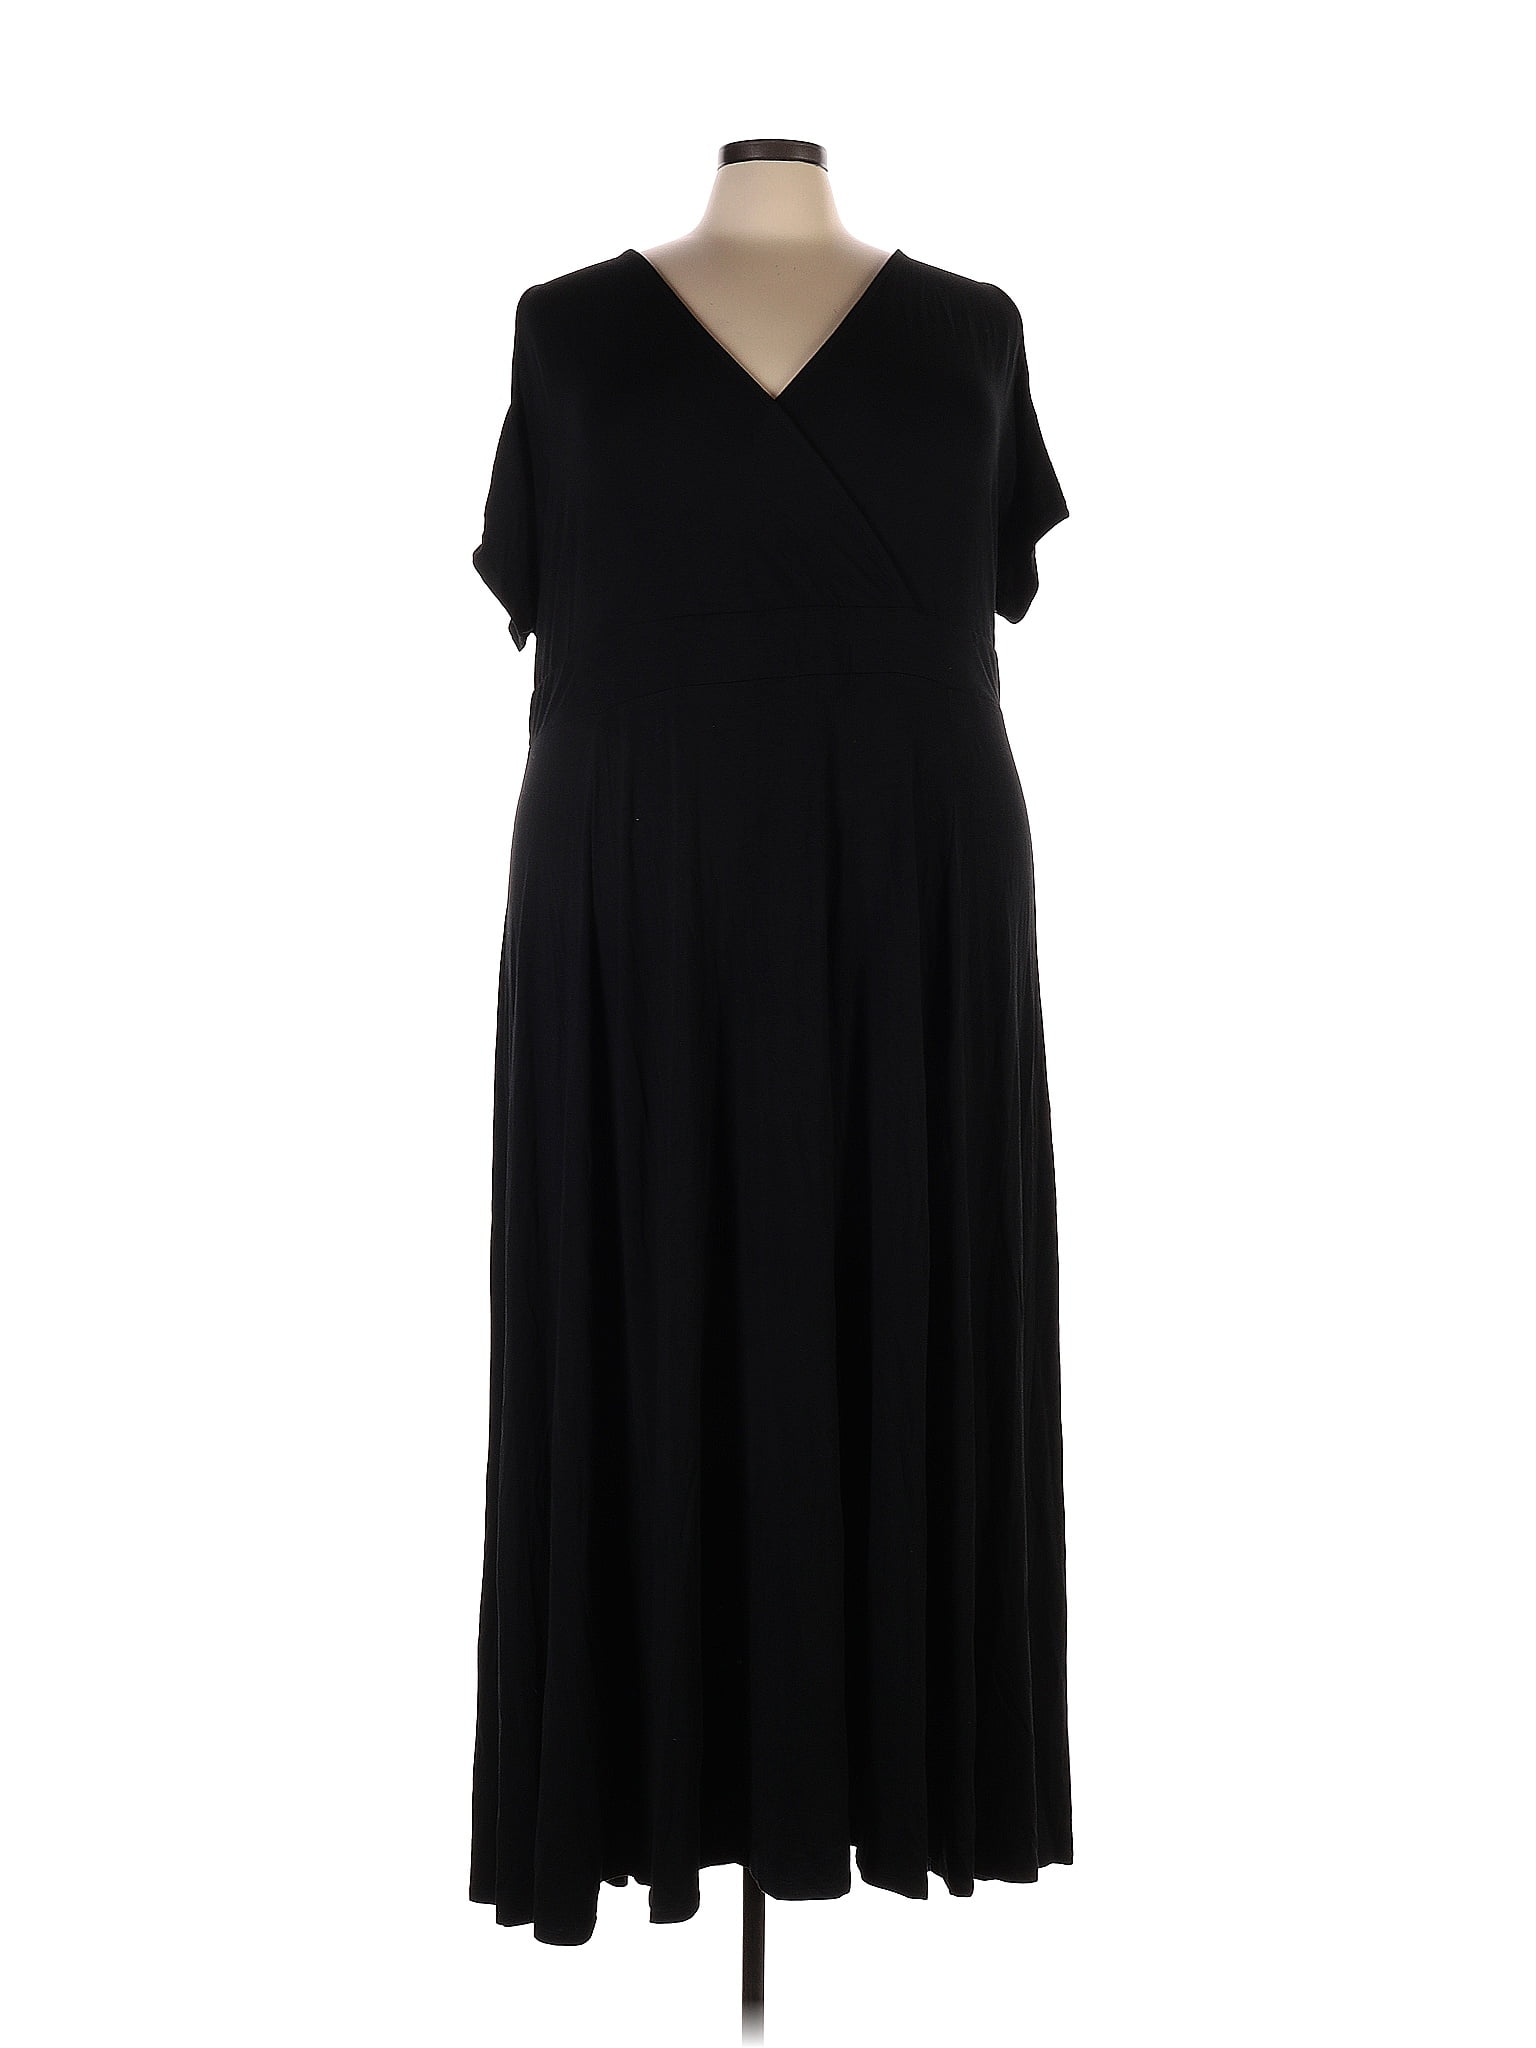 Torrid Solid Black Casual Dress Size 5X Plus (5) (Plus) - 53% off | thredUP